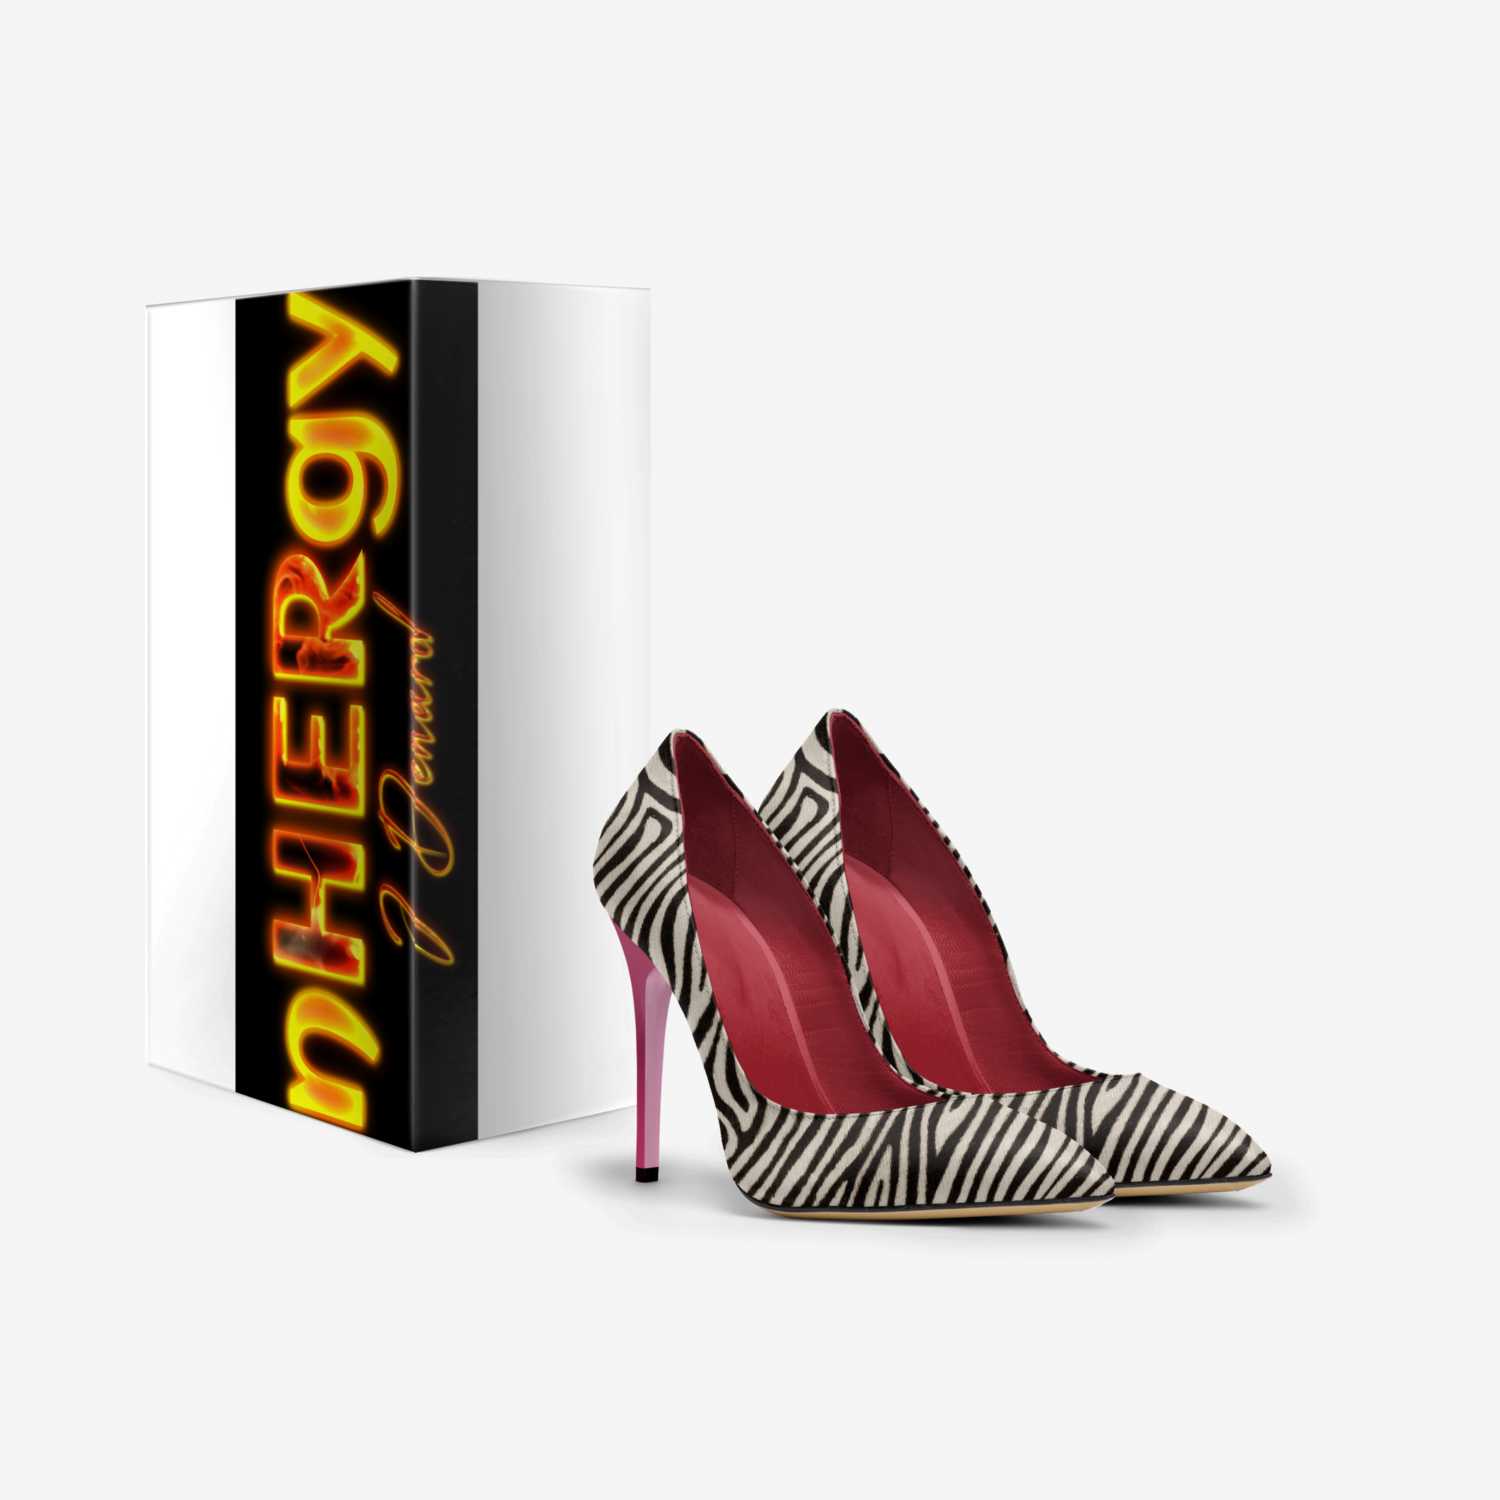 nHERgy by J Denard custom made in Italy shoes by Jarrod Dixon | Box view